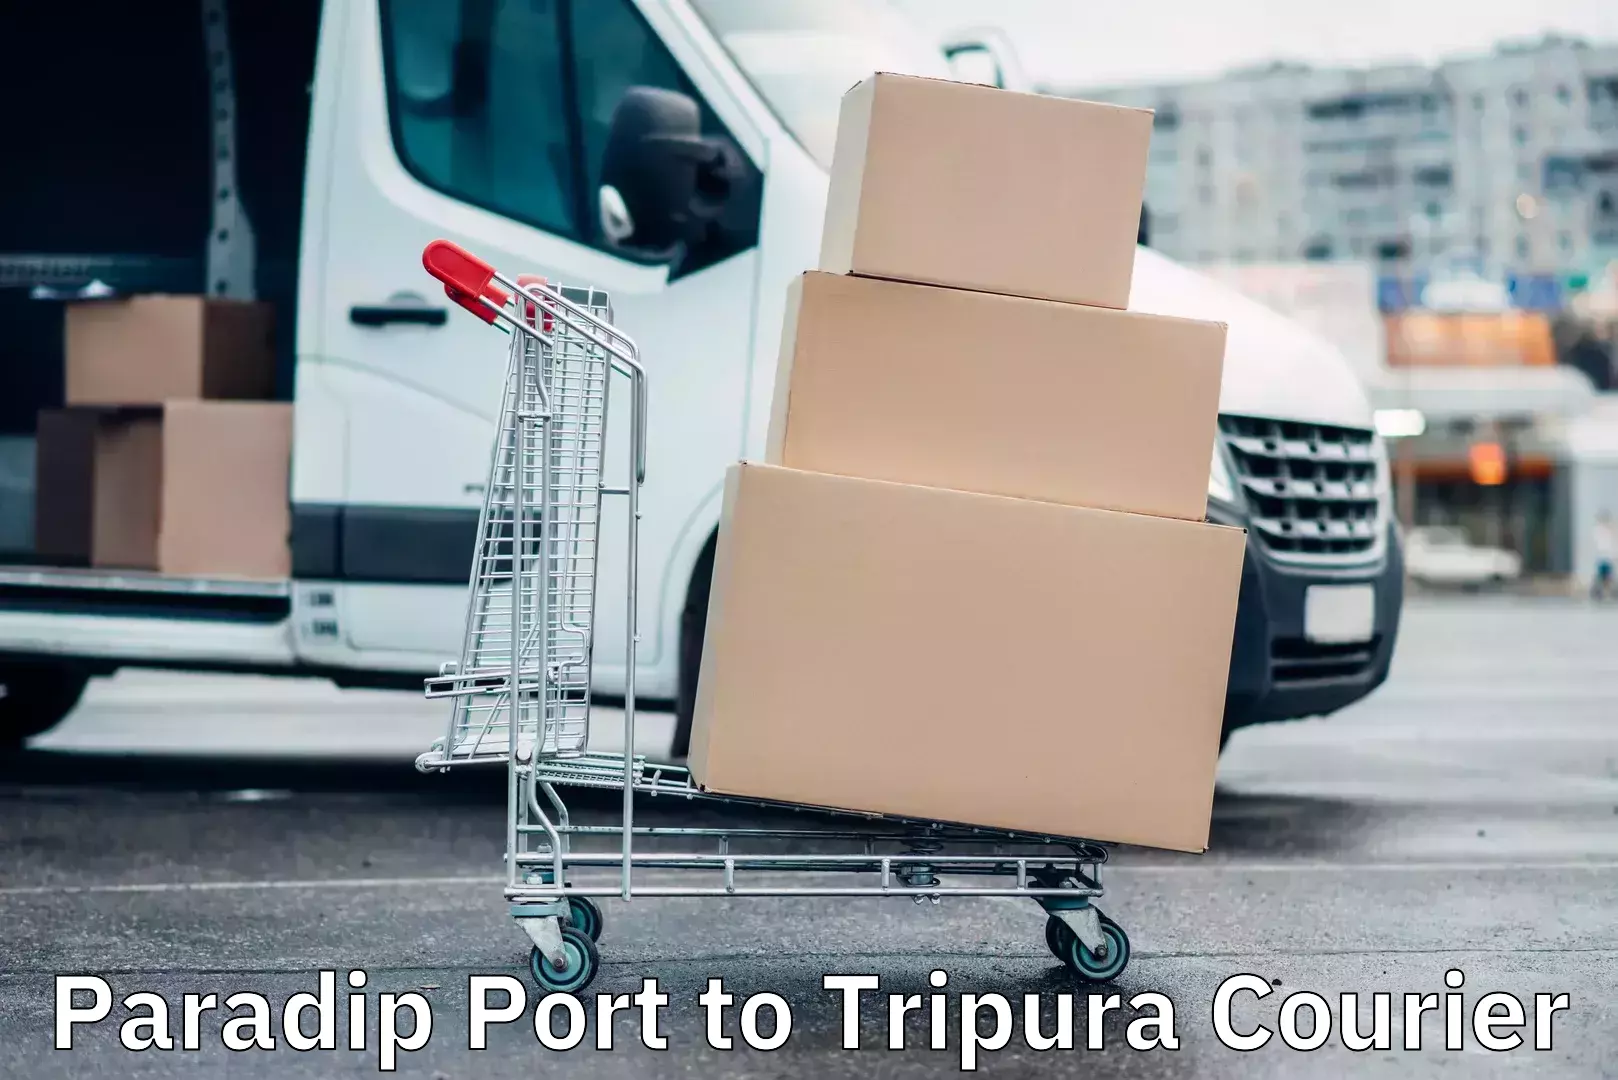 Specialized shipment handling Paradip Port to Tripura